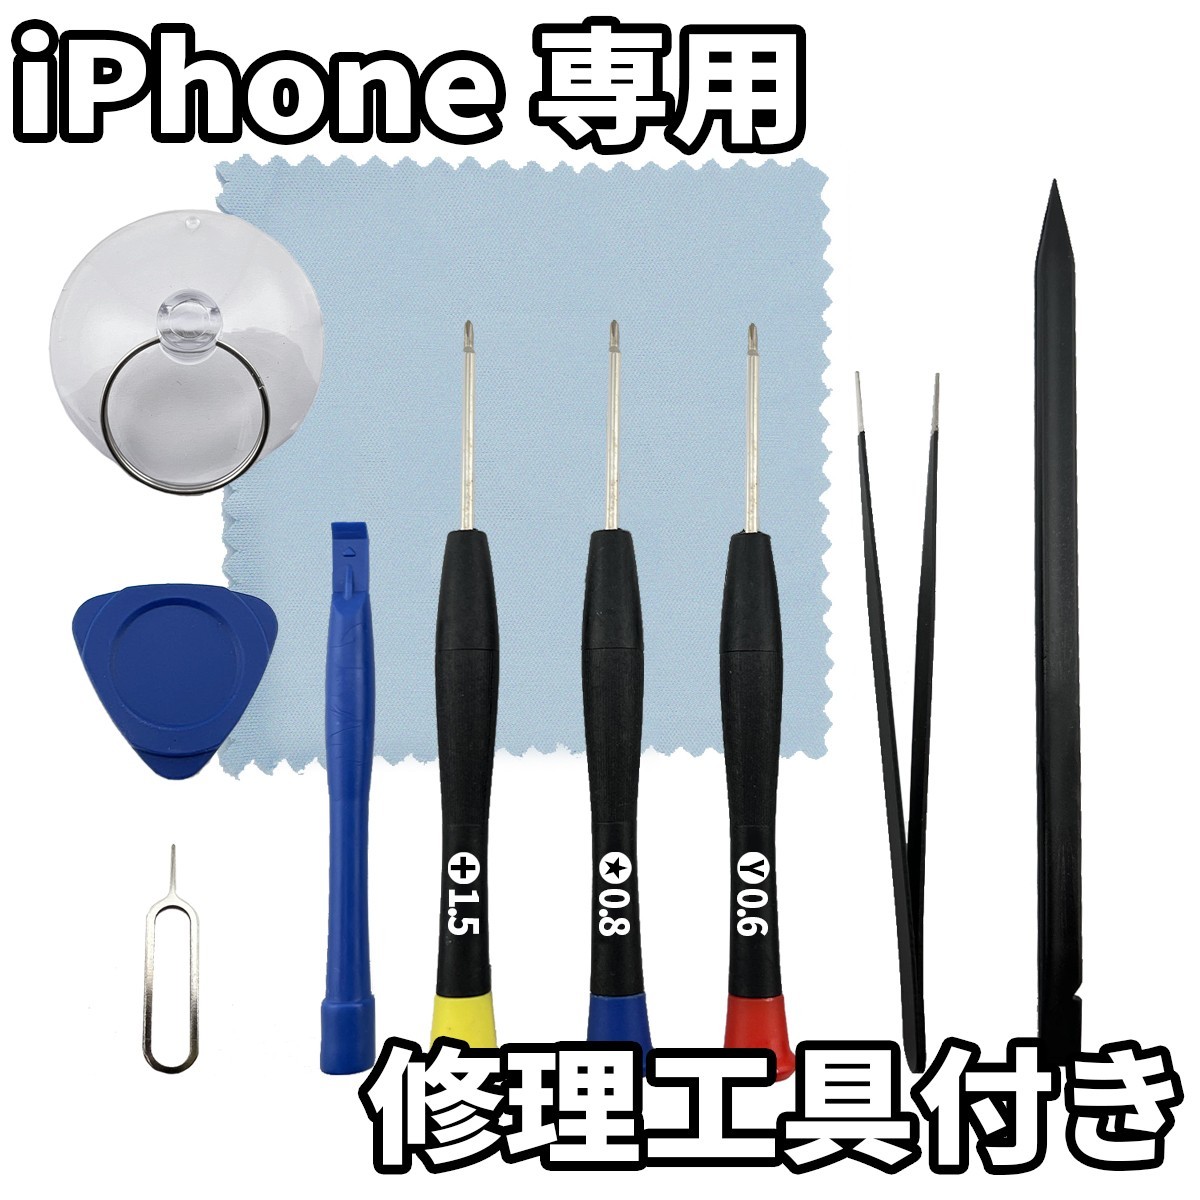 iPhone6splus 高品質液晶 フロントパネル 白 高品質AAA 互換品 LCD 業者 画面割れ 液晶 iphone 修理 ガラス割れ 交換 防水テープ_画像4